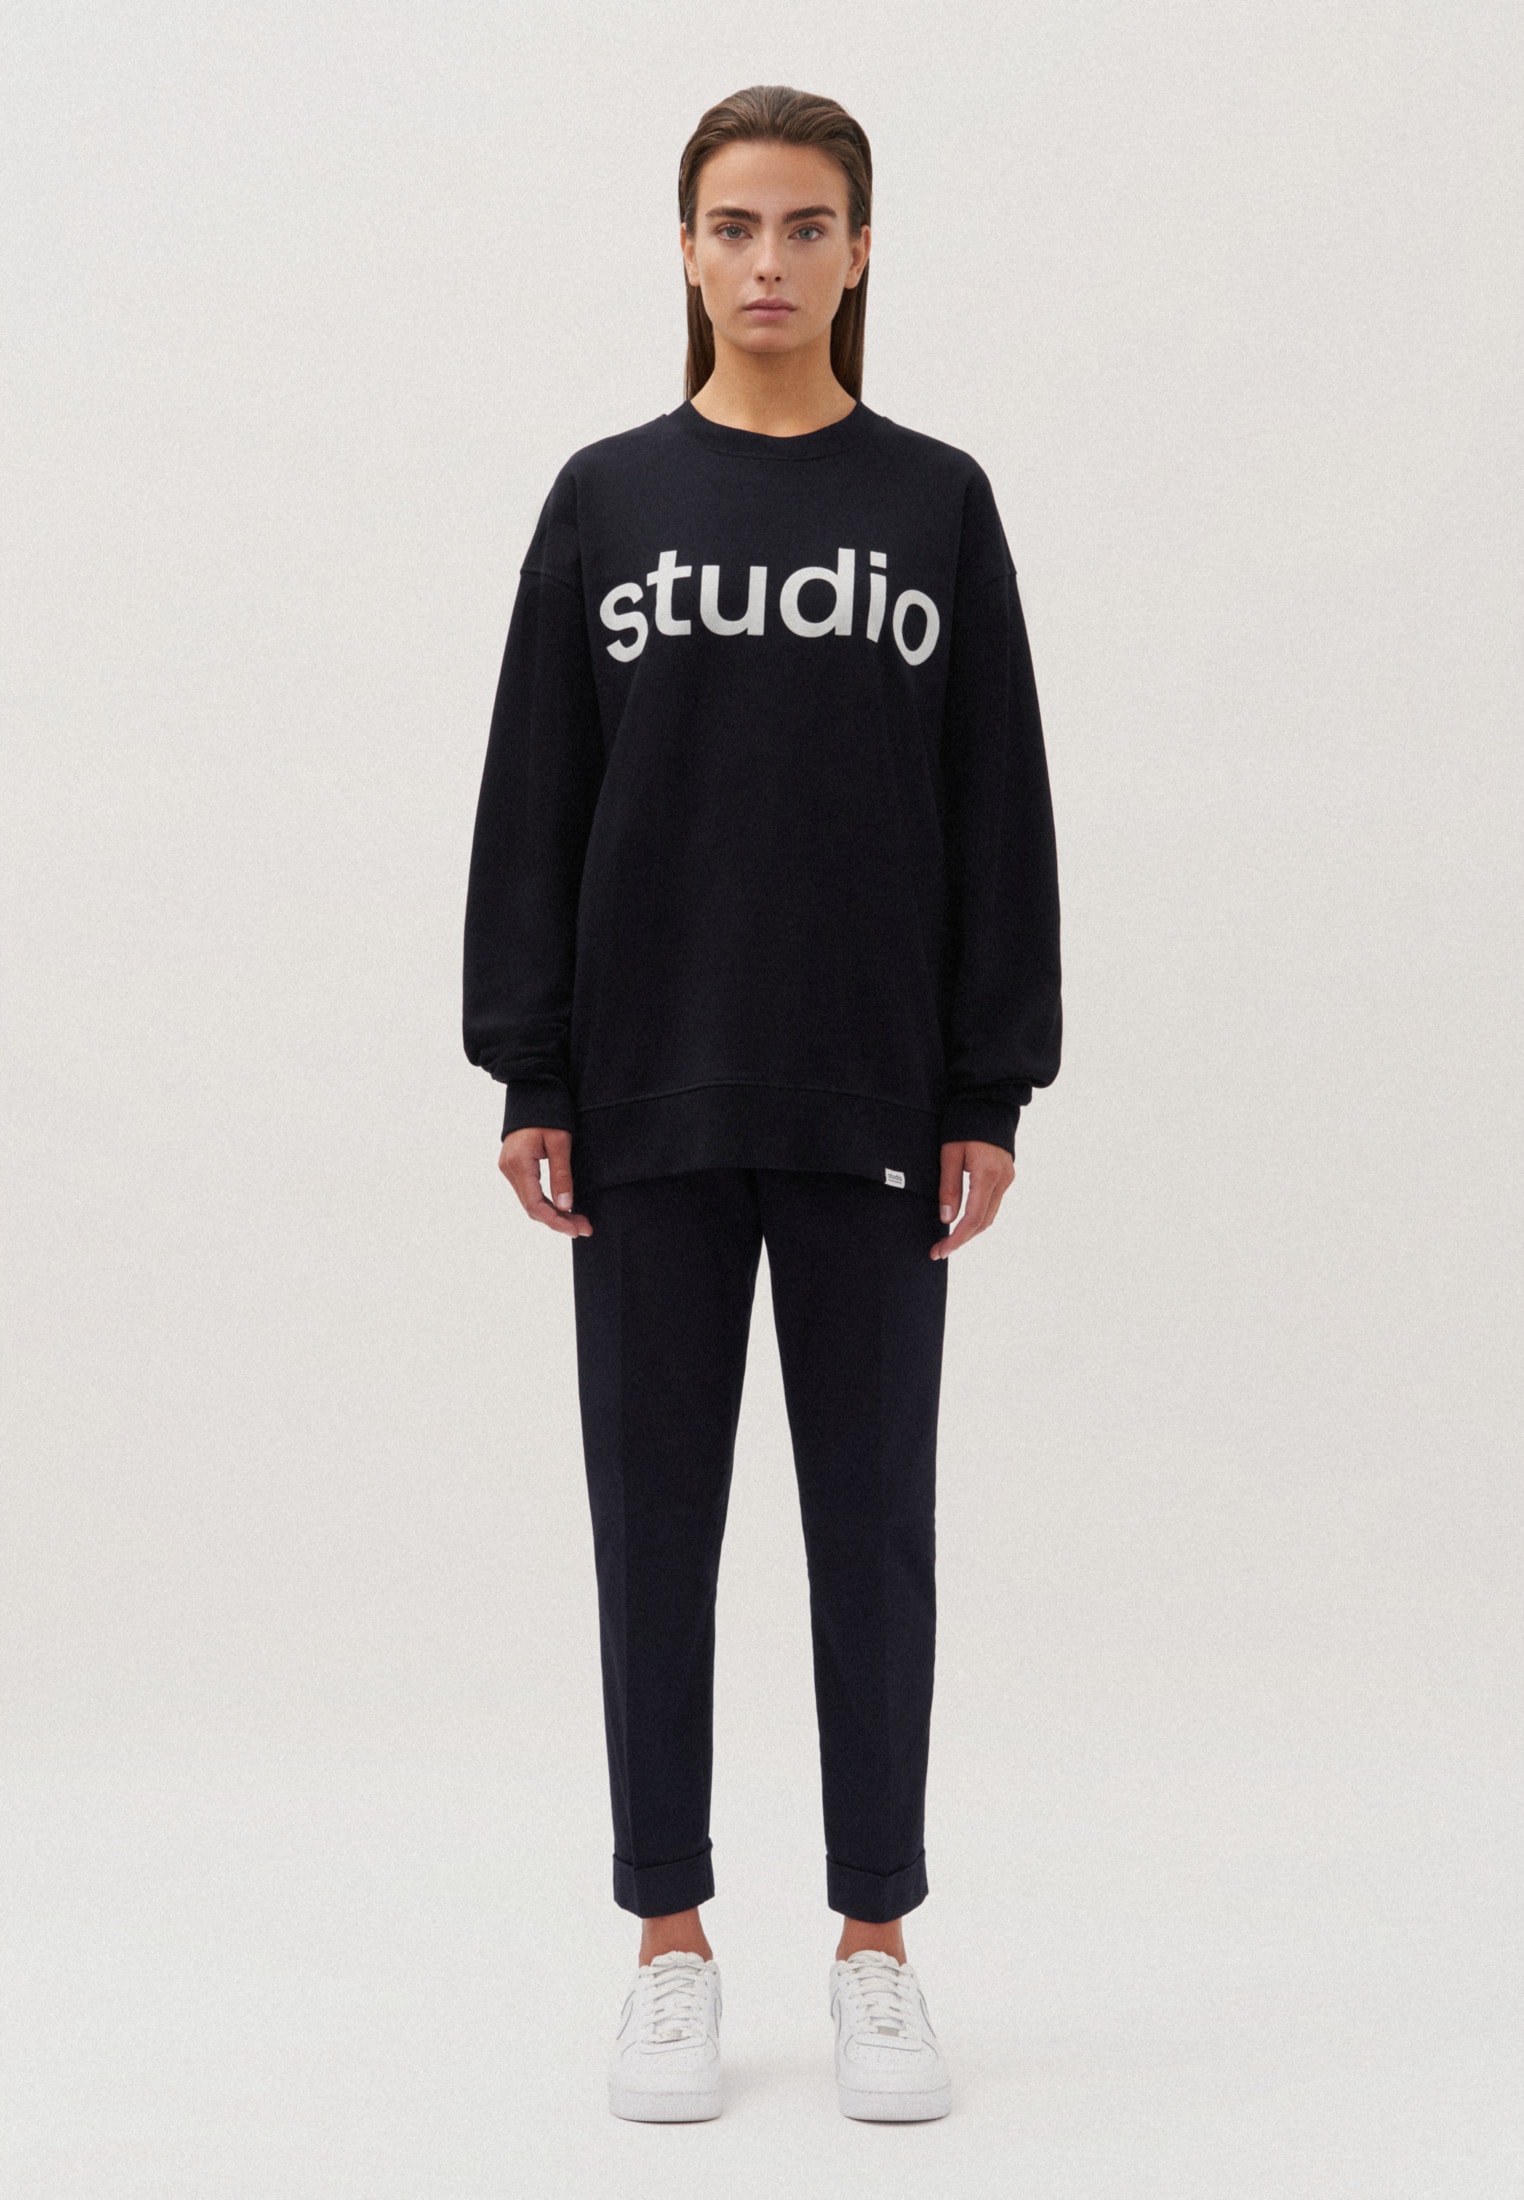 studio seidensticker Sweatshirt »Studio«, Langarm Rundhals Druck